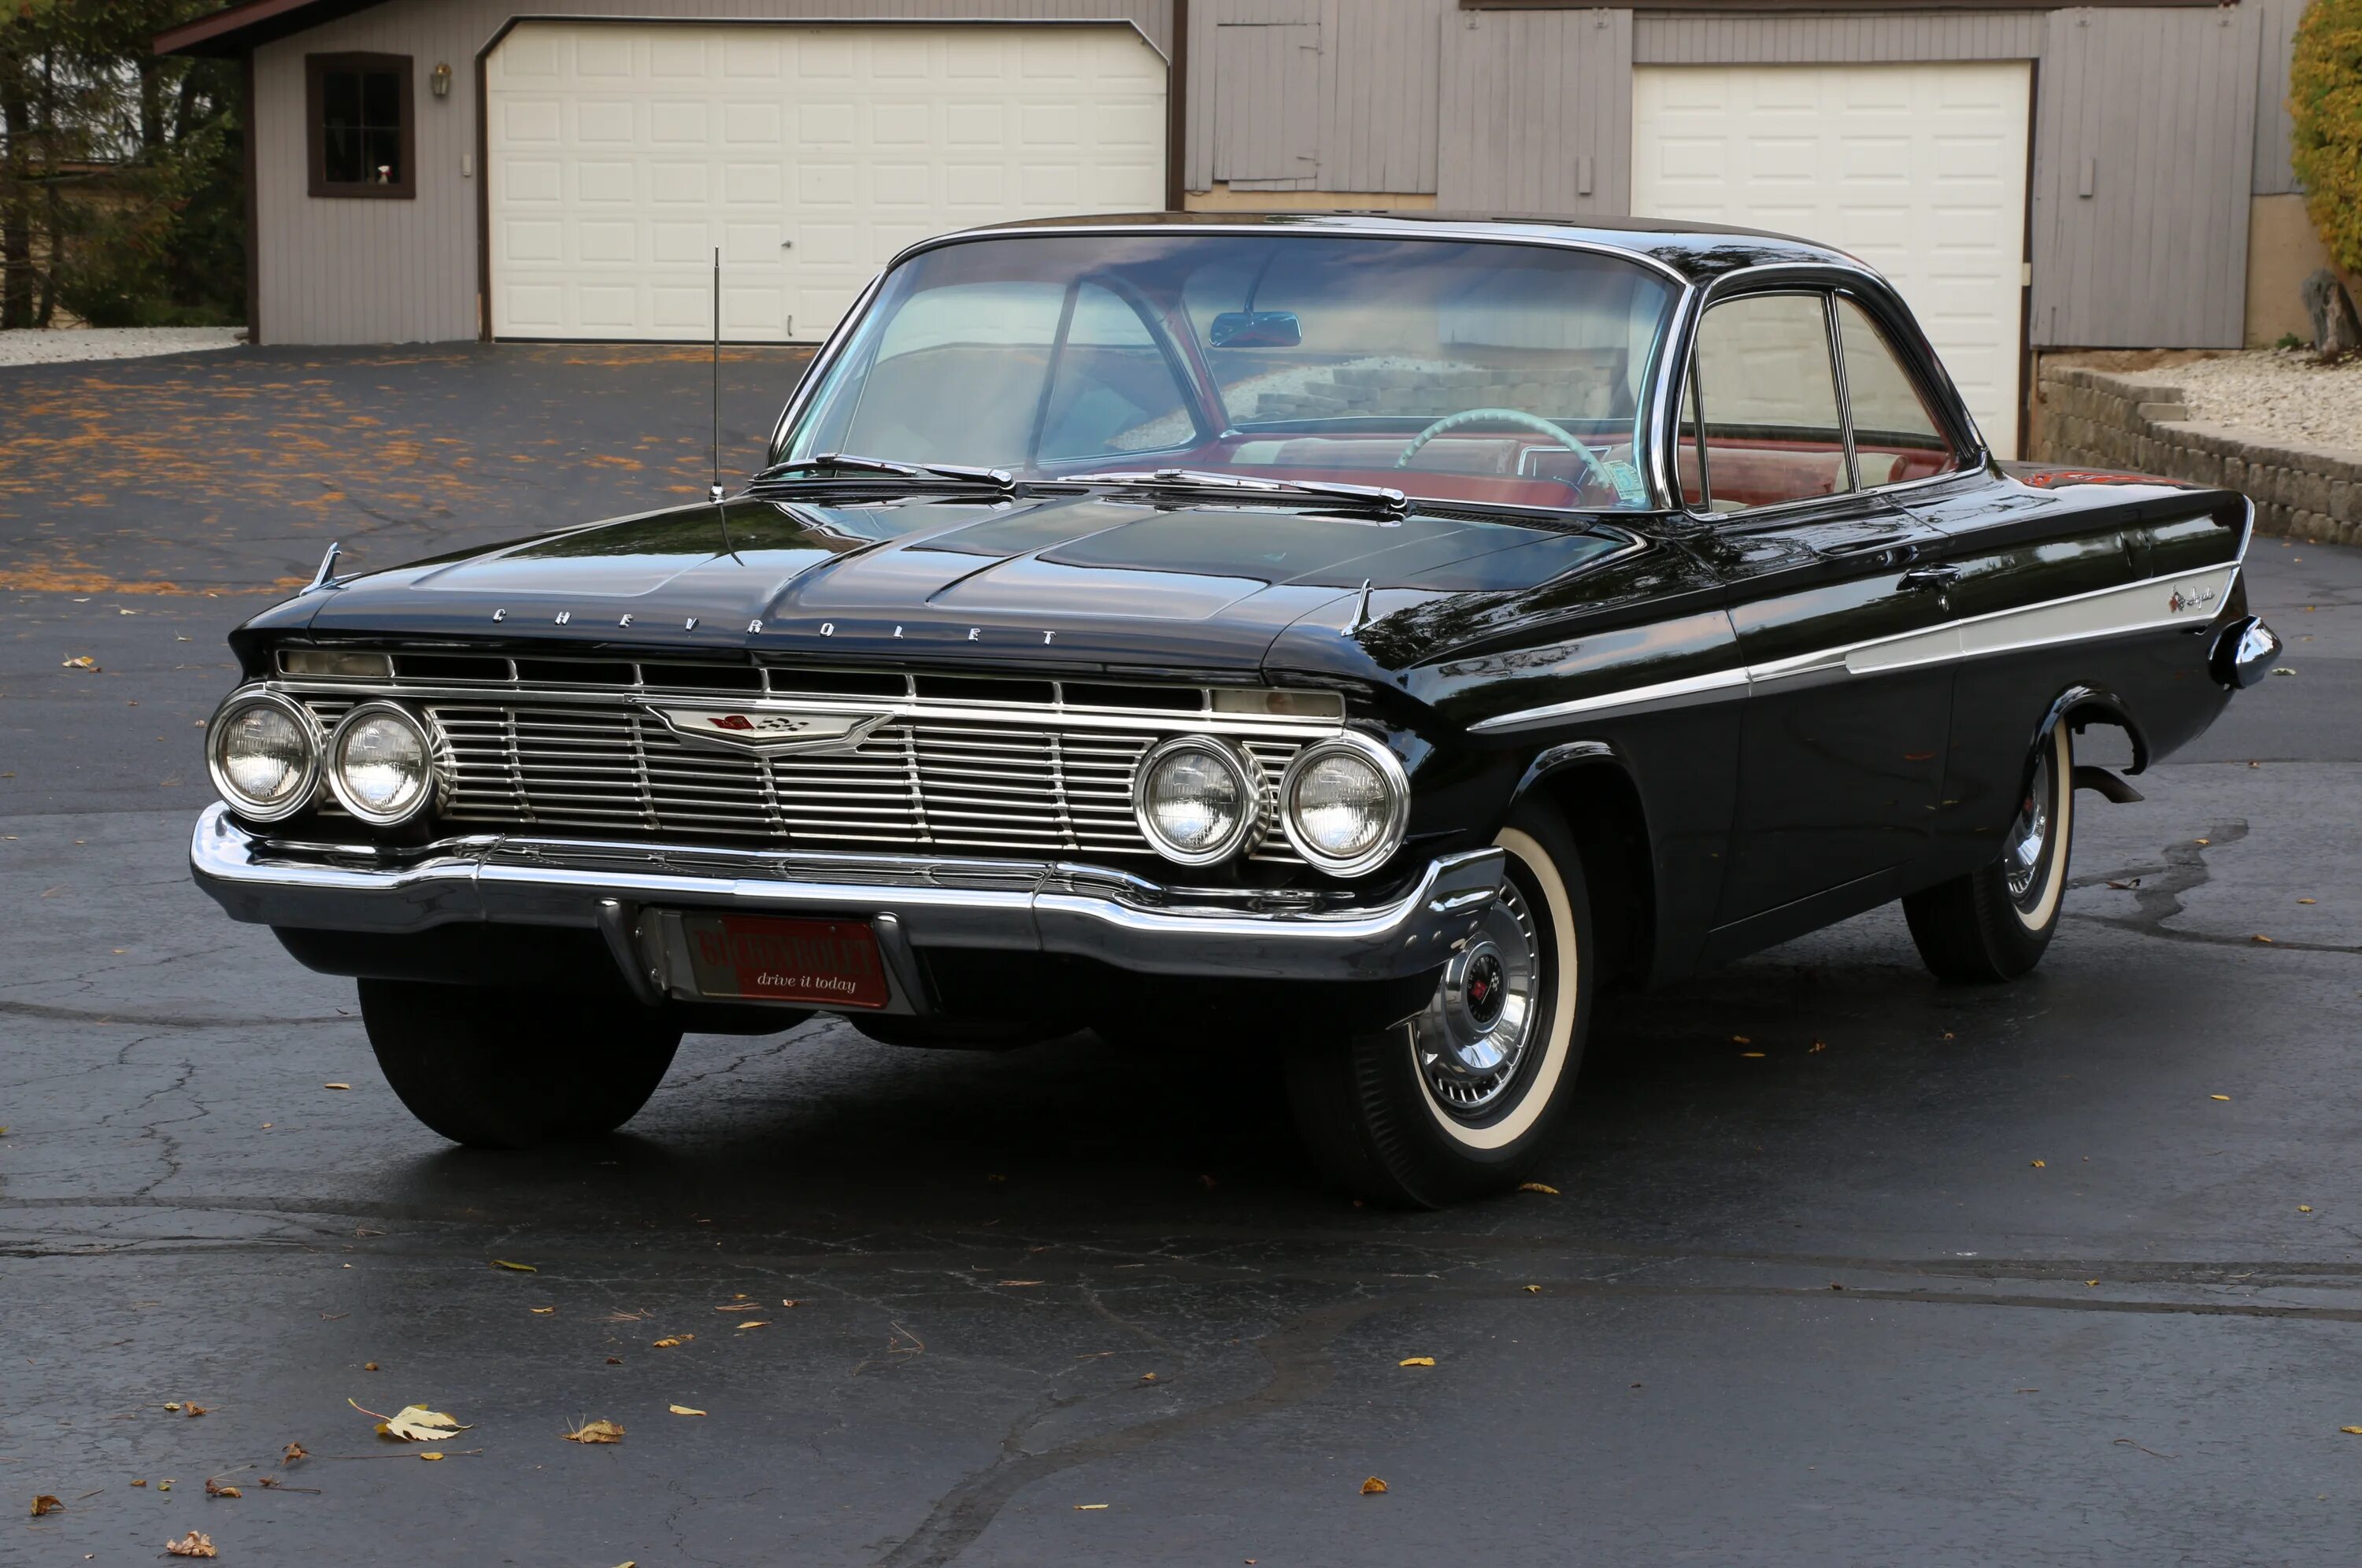 Chevrolet impala год. Шевроле Импала 1967. Chevrolet Impala 1961. Автомобиль Шевроле Импала 1967. Chevrolet Impala 1967 хардтоп.